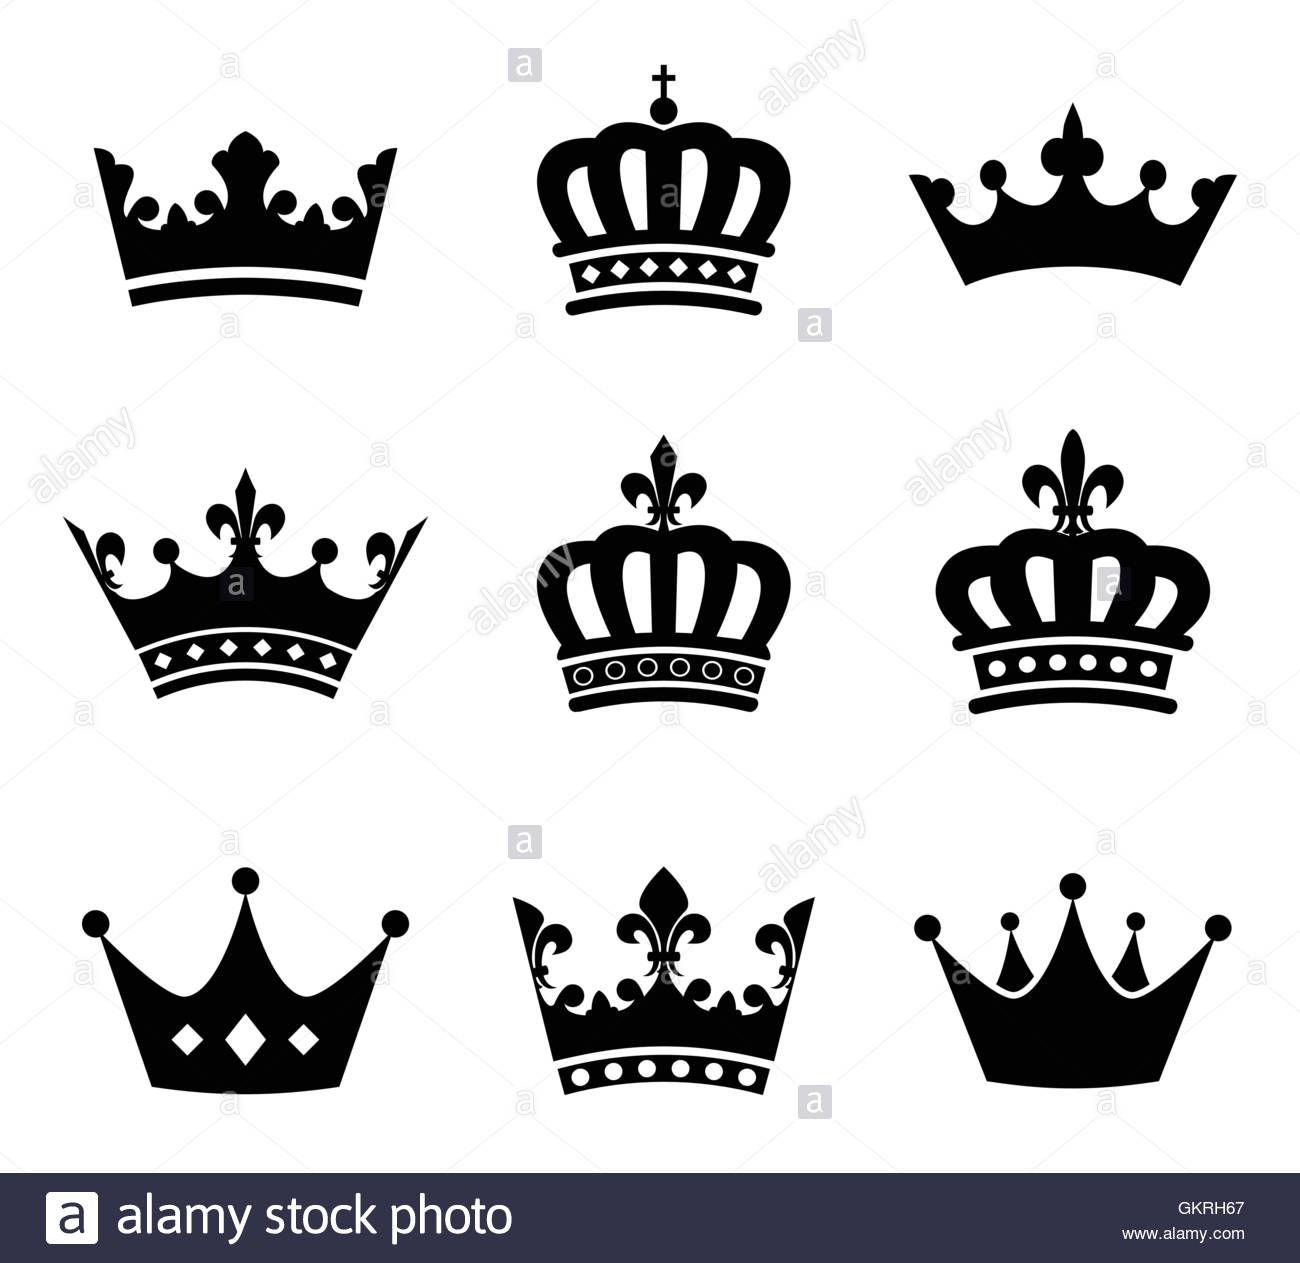 Queen Crown Logo - Free King Crown Logo Icon 336733. Download King Crown Logo Icon